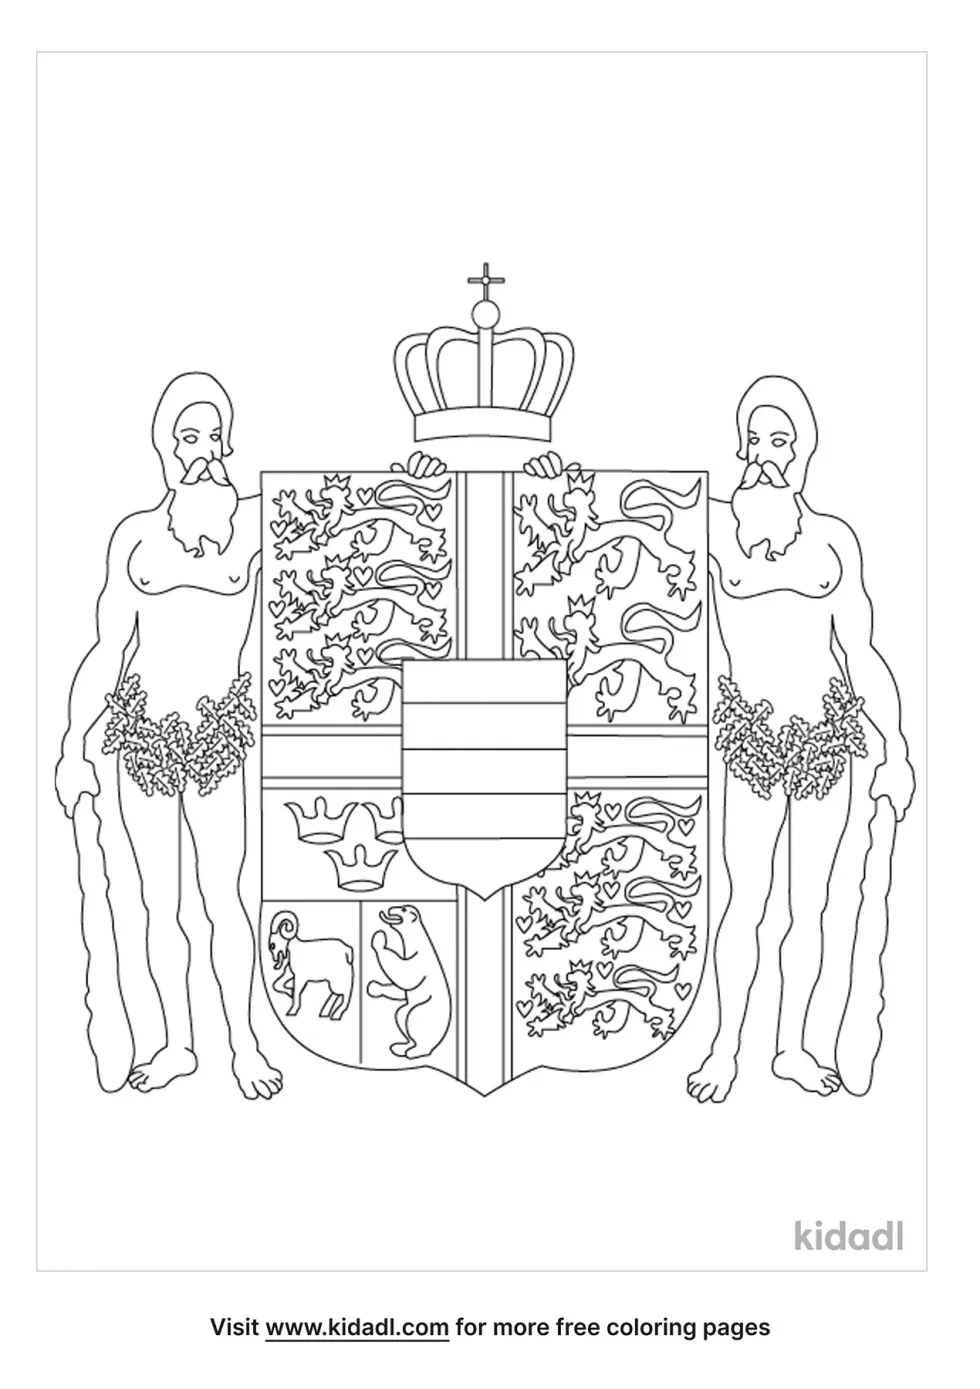 Denmark Coat Of Arms